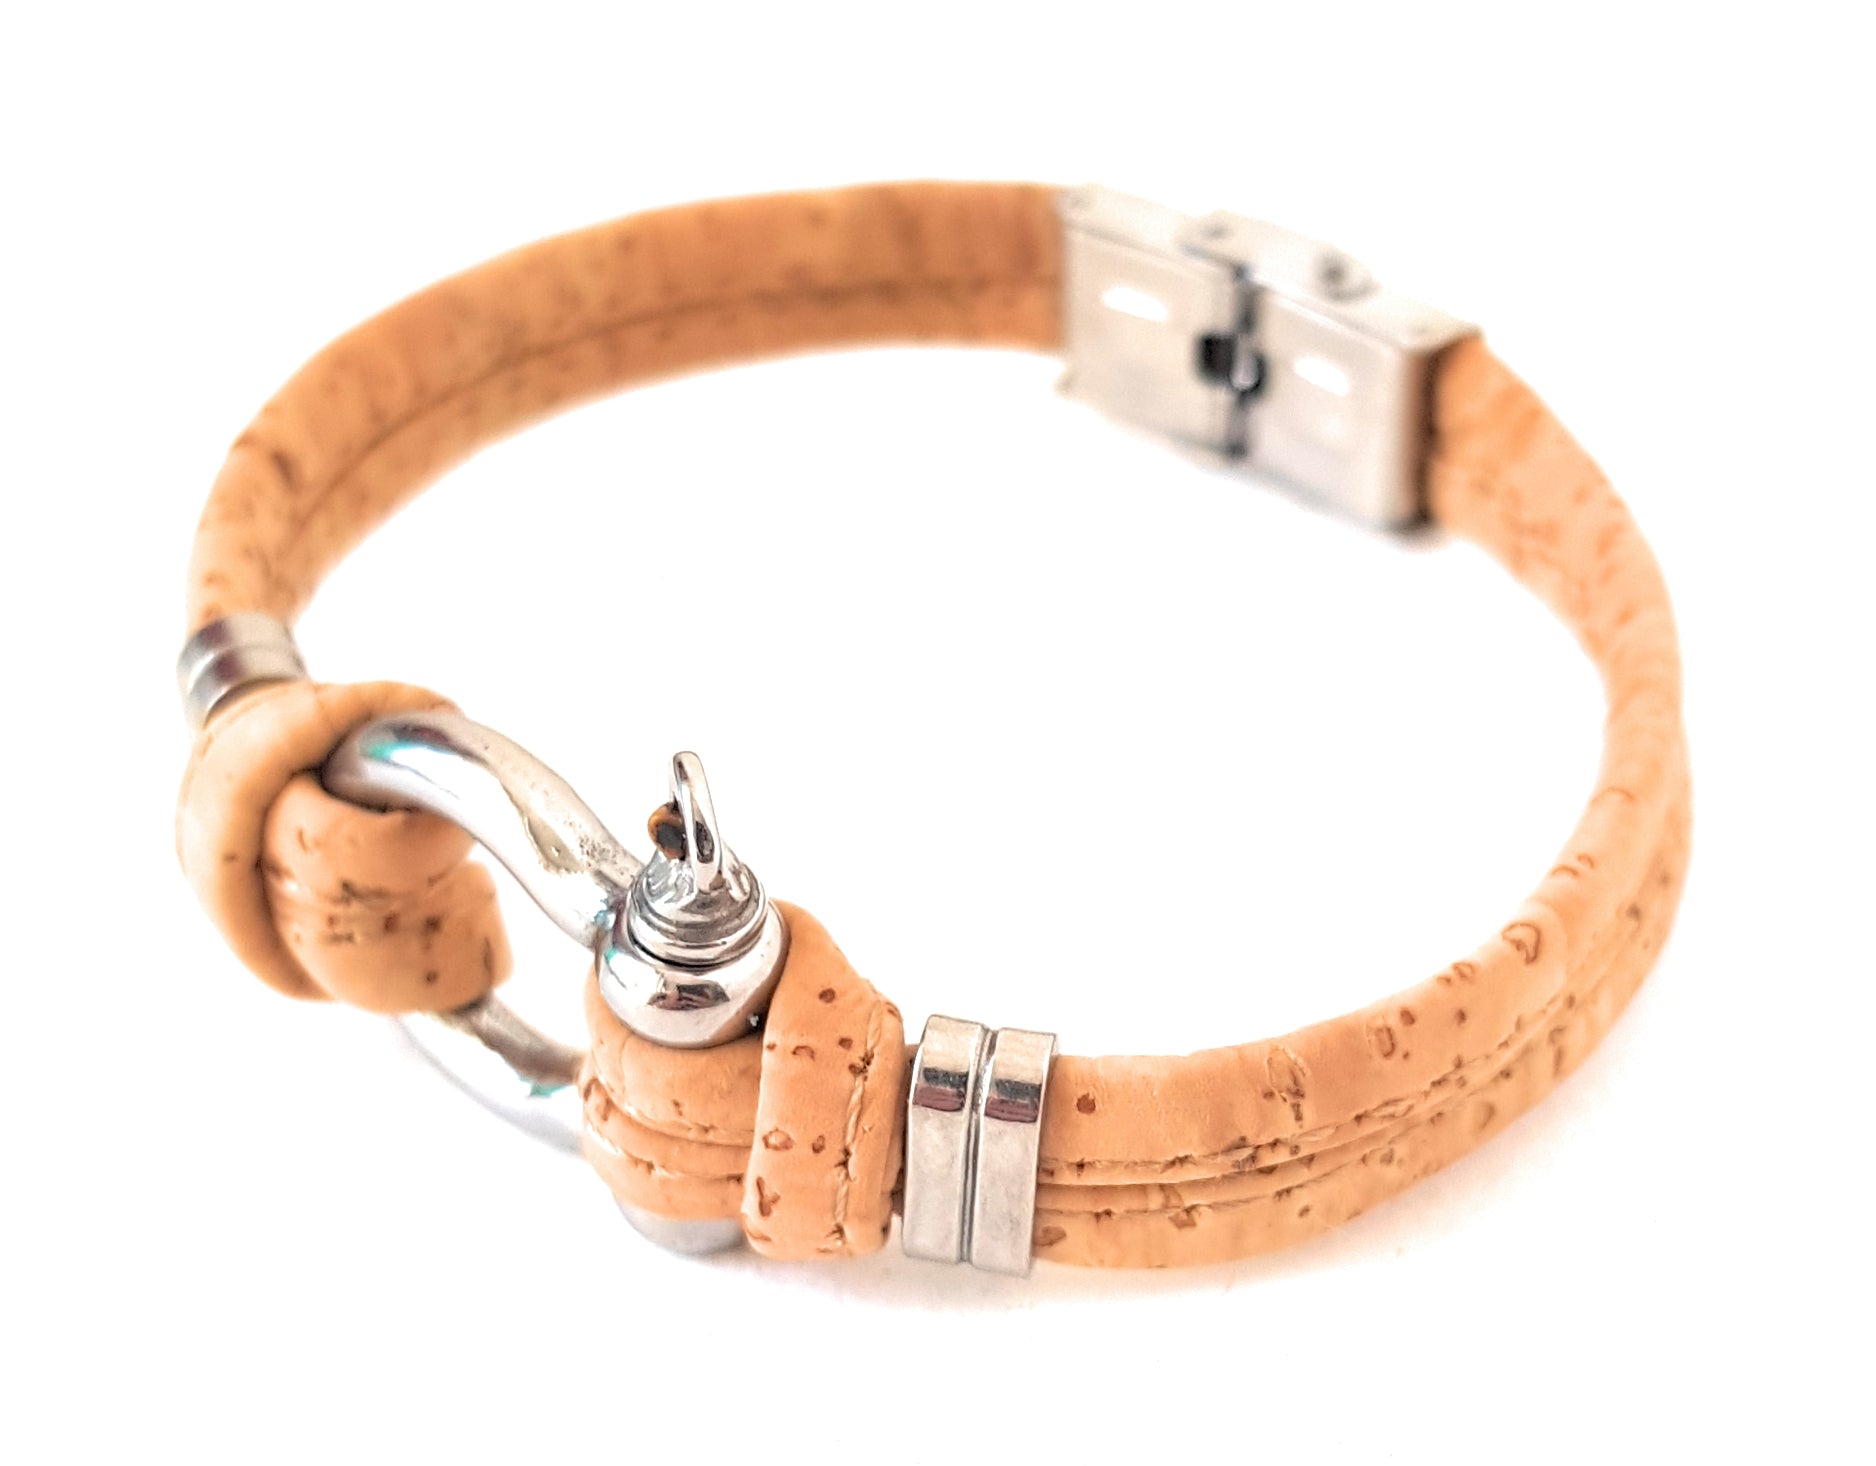 Cork bracelet for Men, bracelets, vegan ideas, sustainable fashion, Made in Portugal